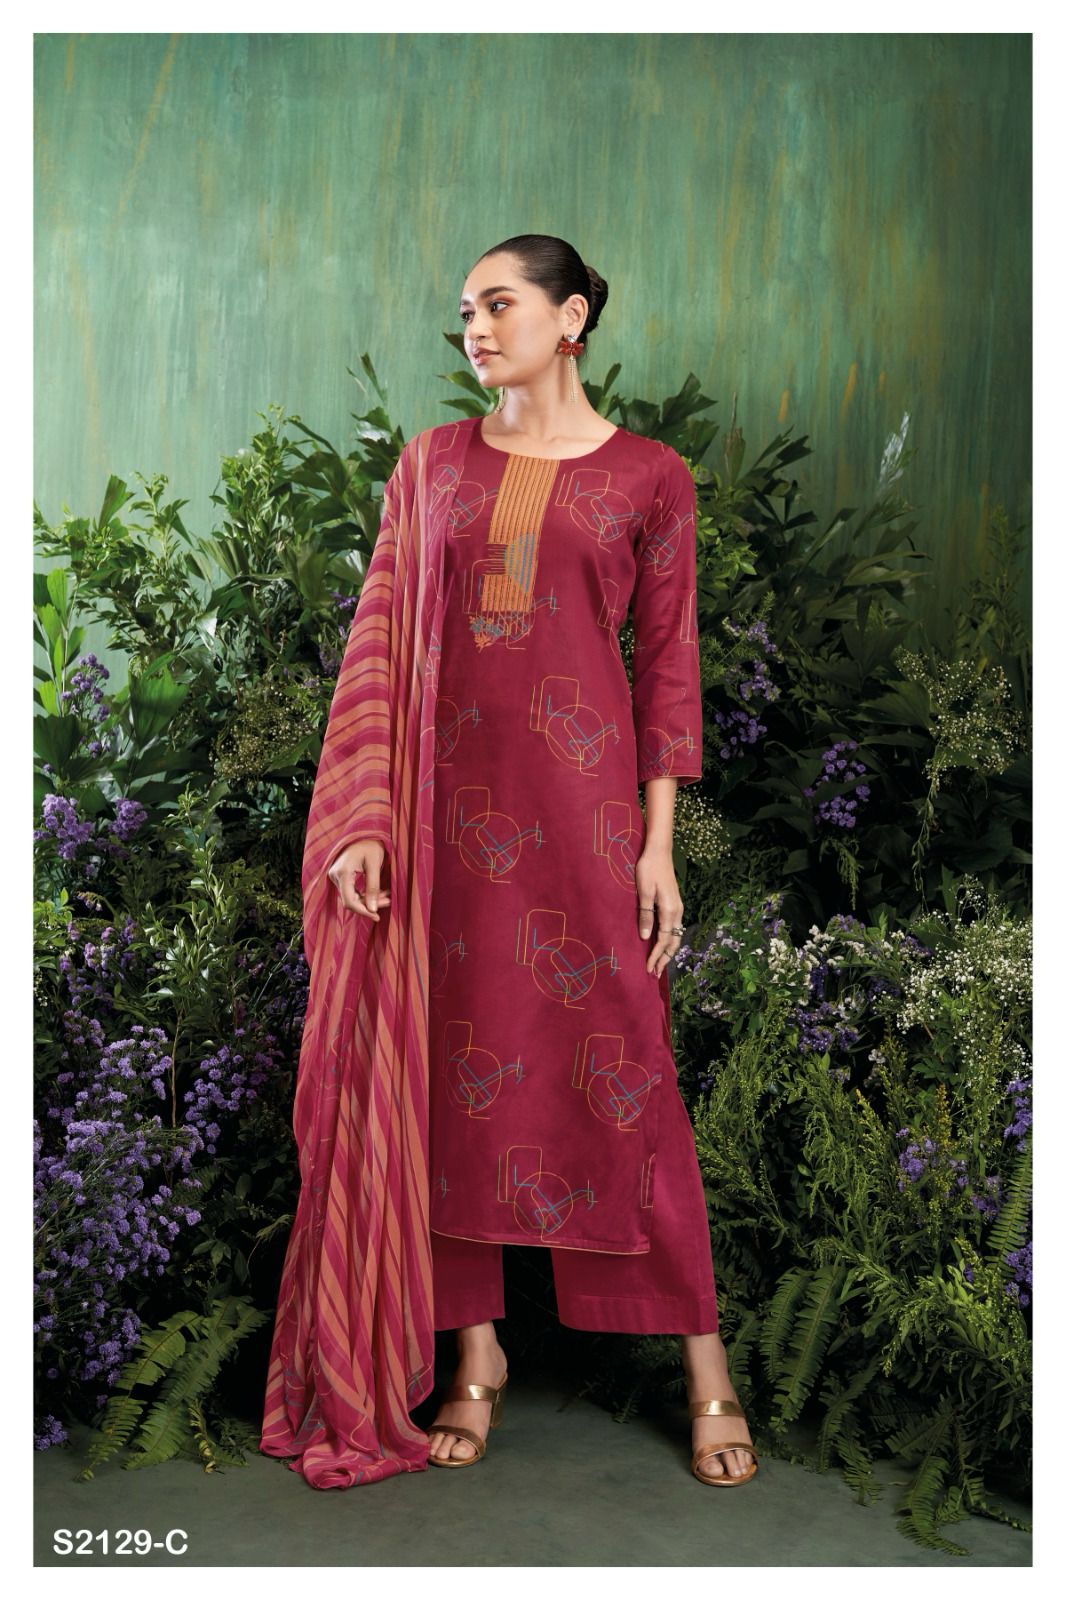 Carista 2129 Ganga Cotton Silk Plazzo Style Suits